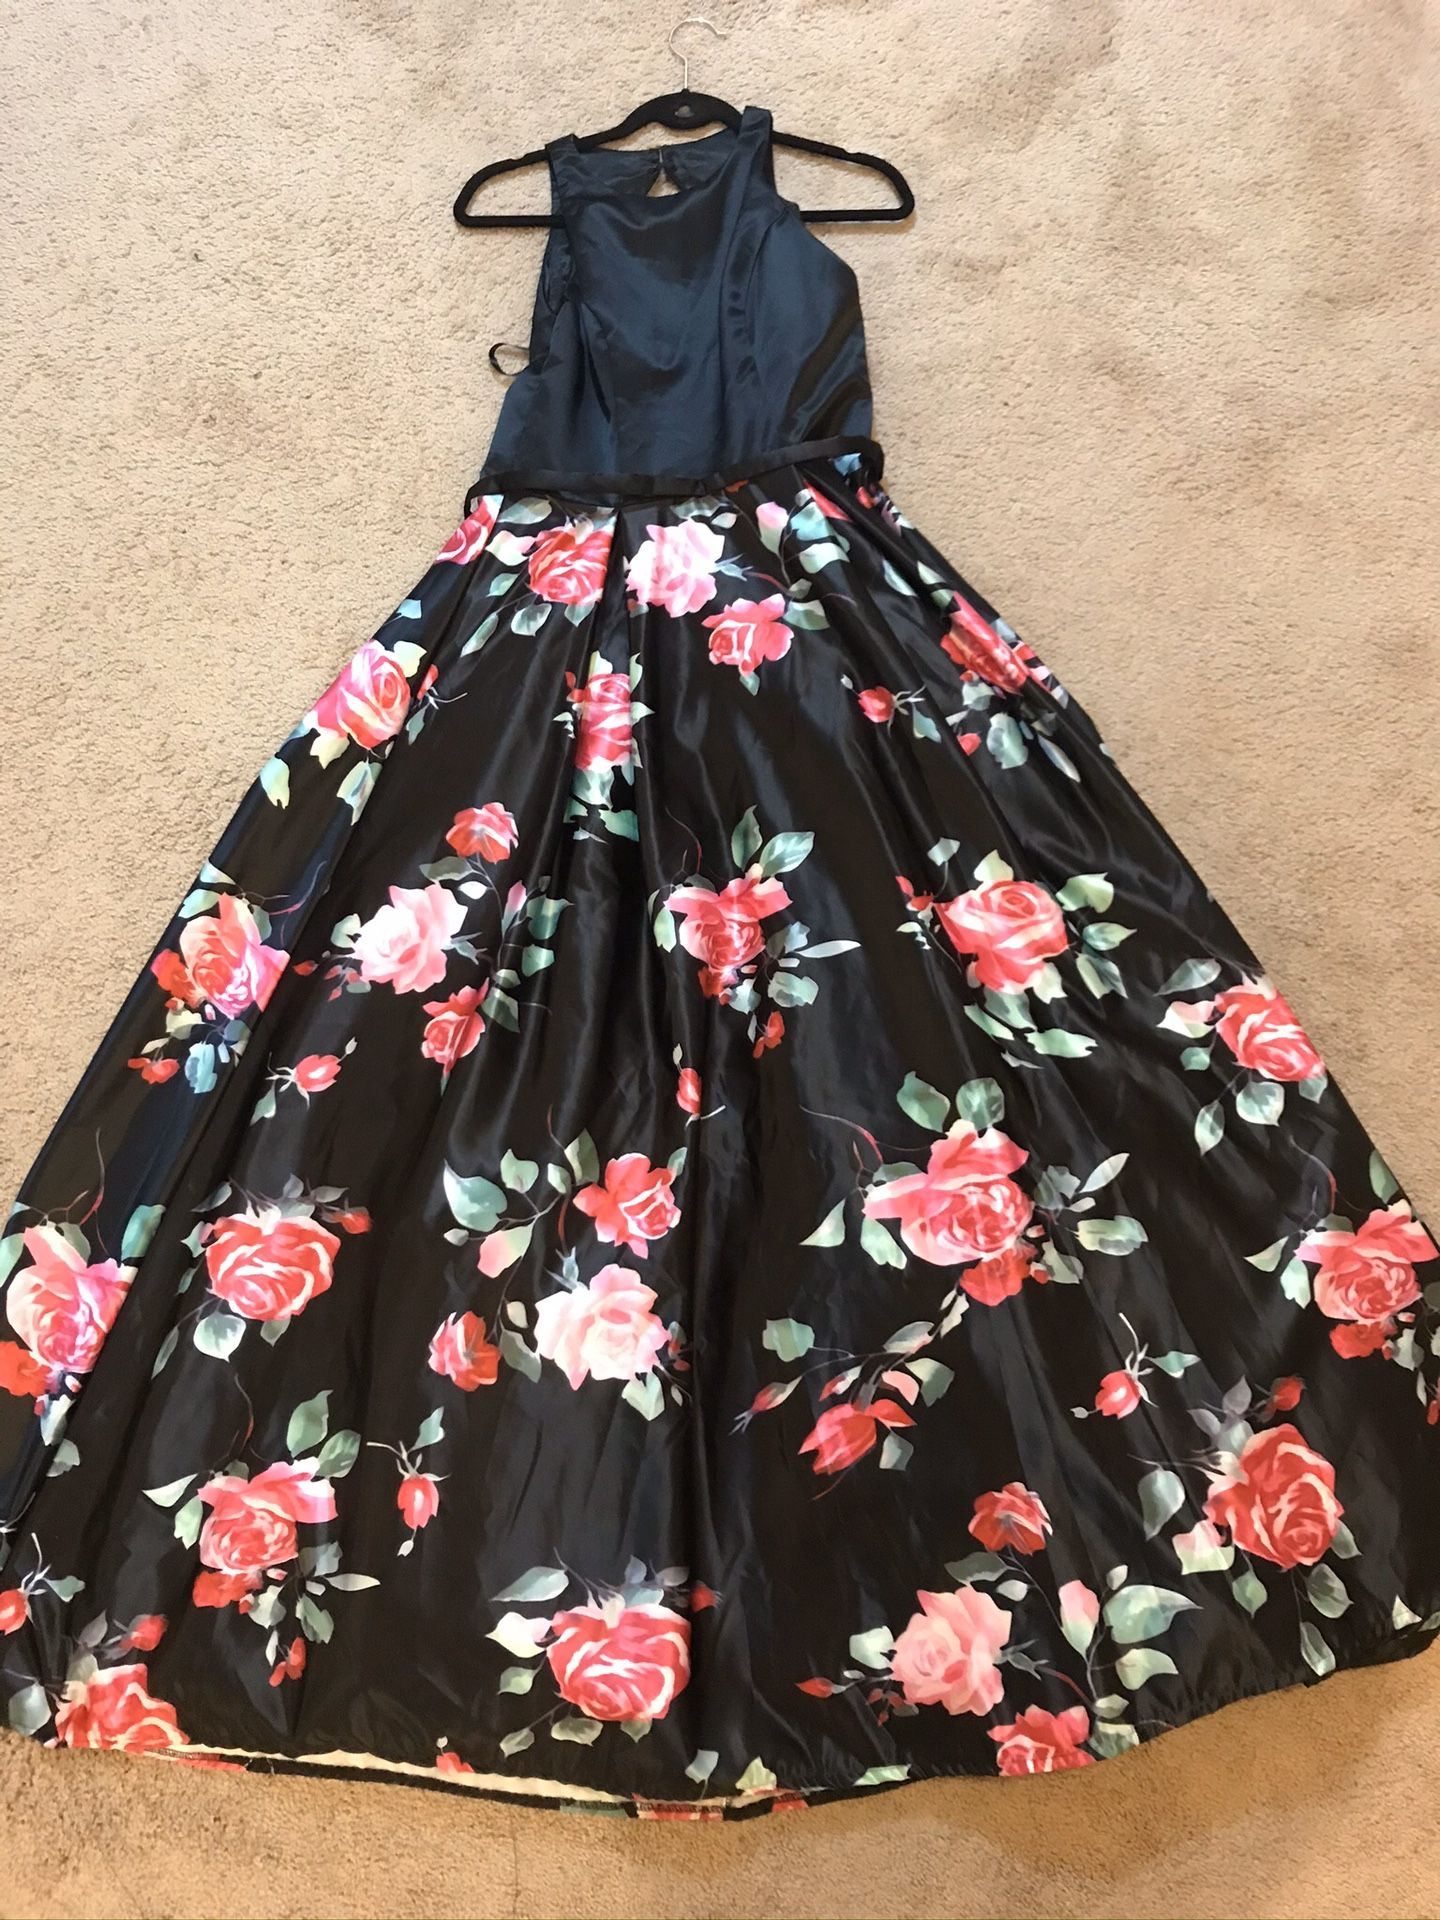 Sz6 black floral ball gown prom dress